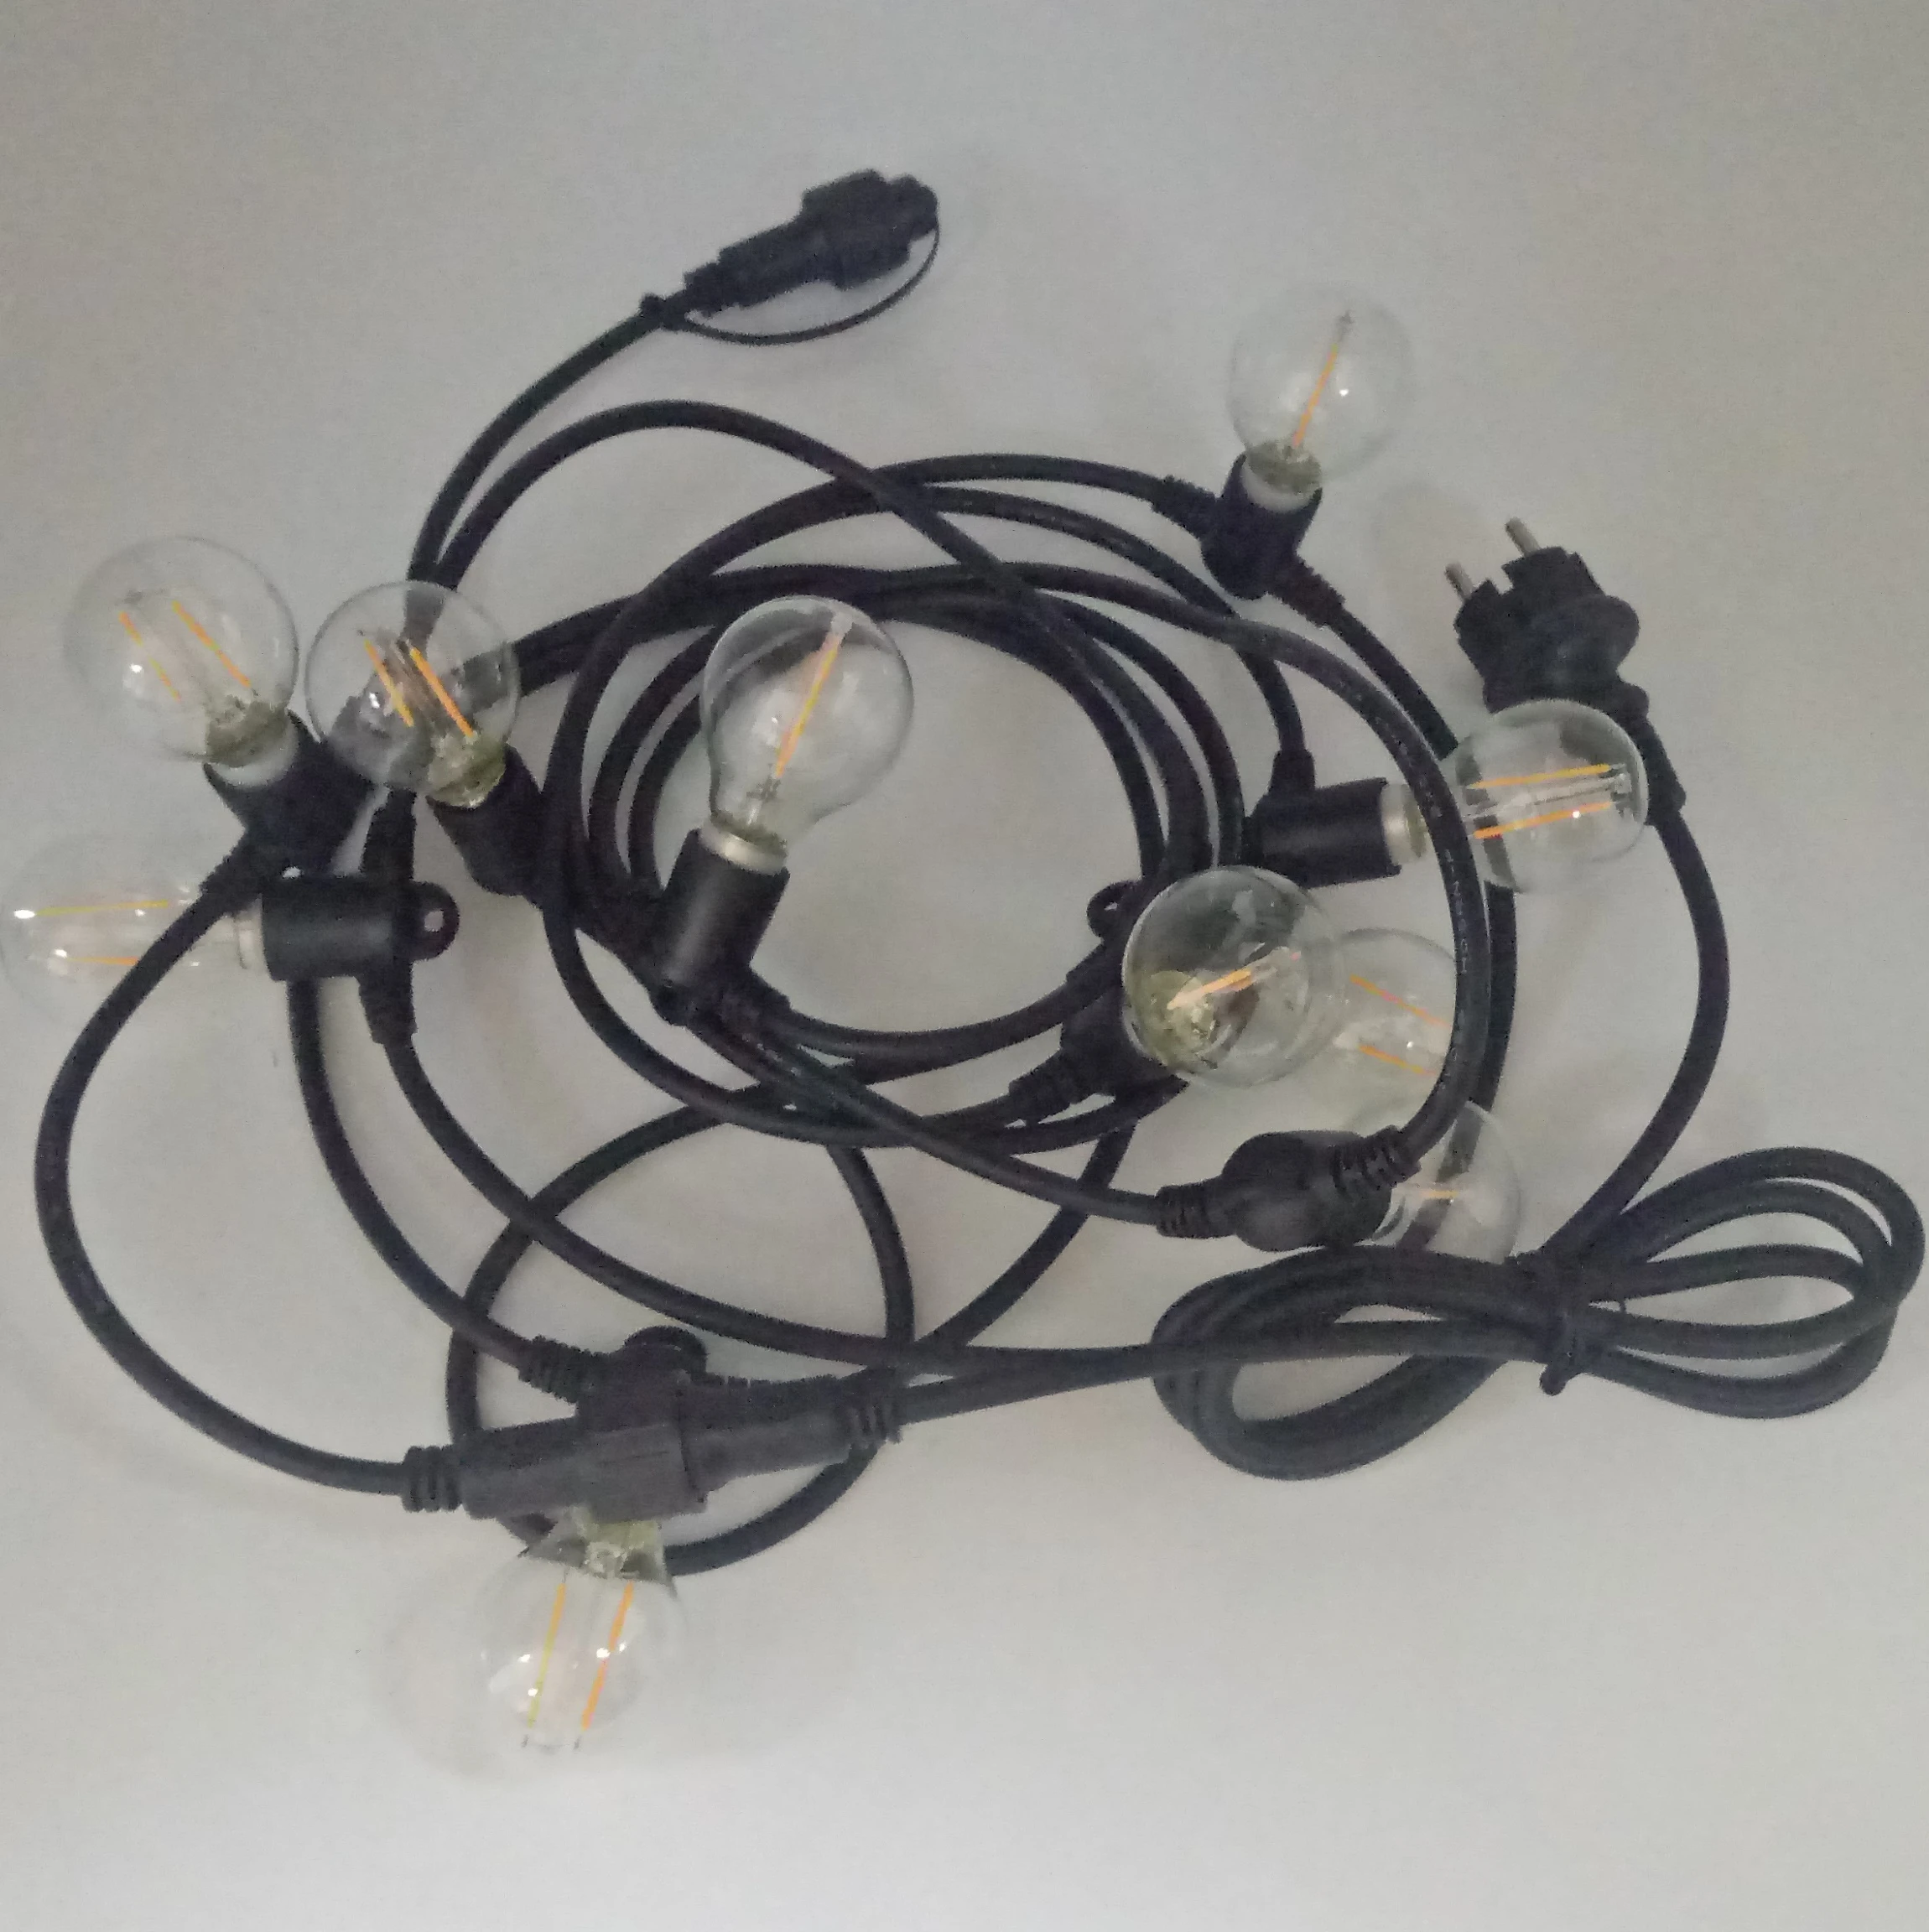 Outdoor led string waterproof e14 holiday cable socket festoon belt lights 5m